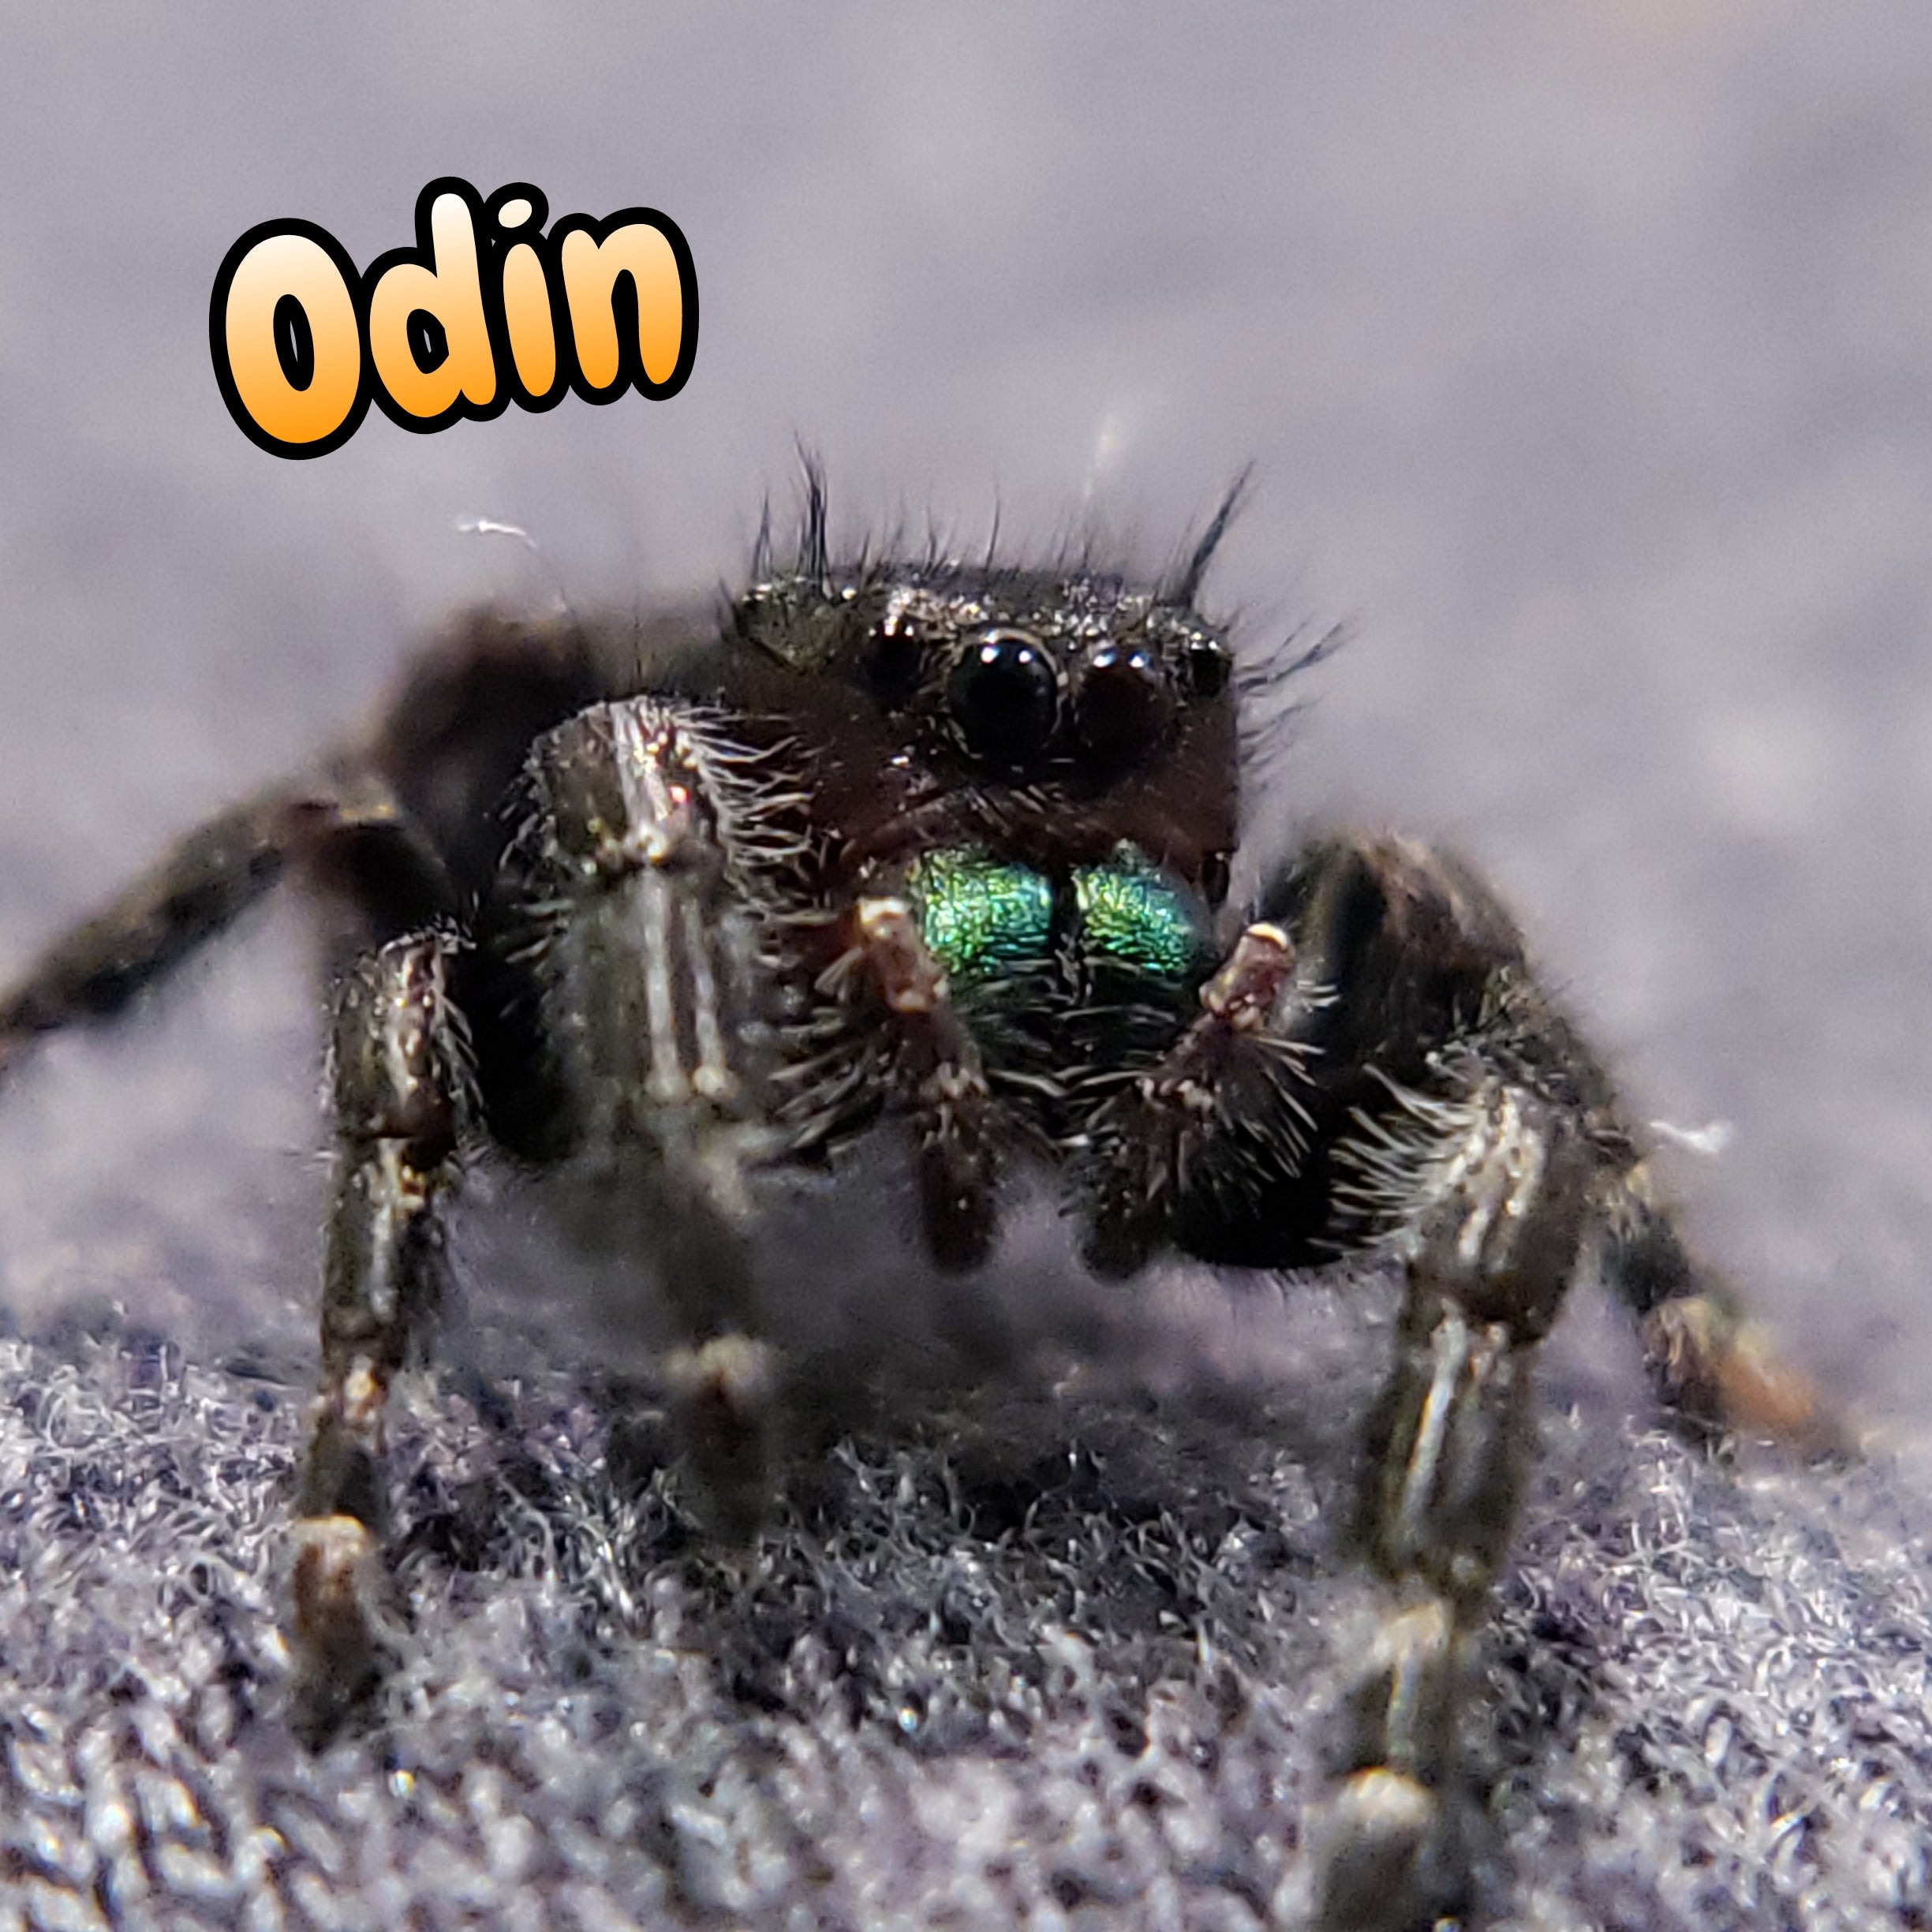 Audax Jumping Spider "Odin"